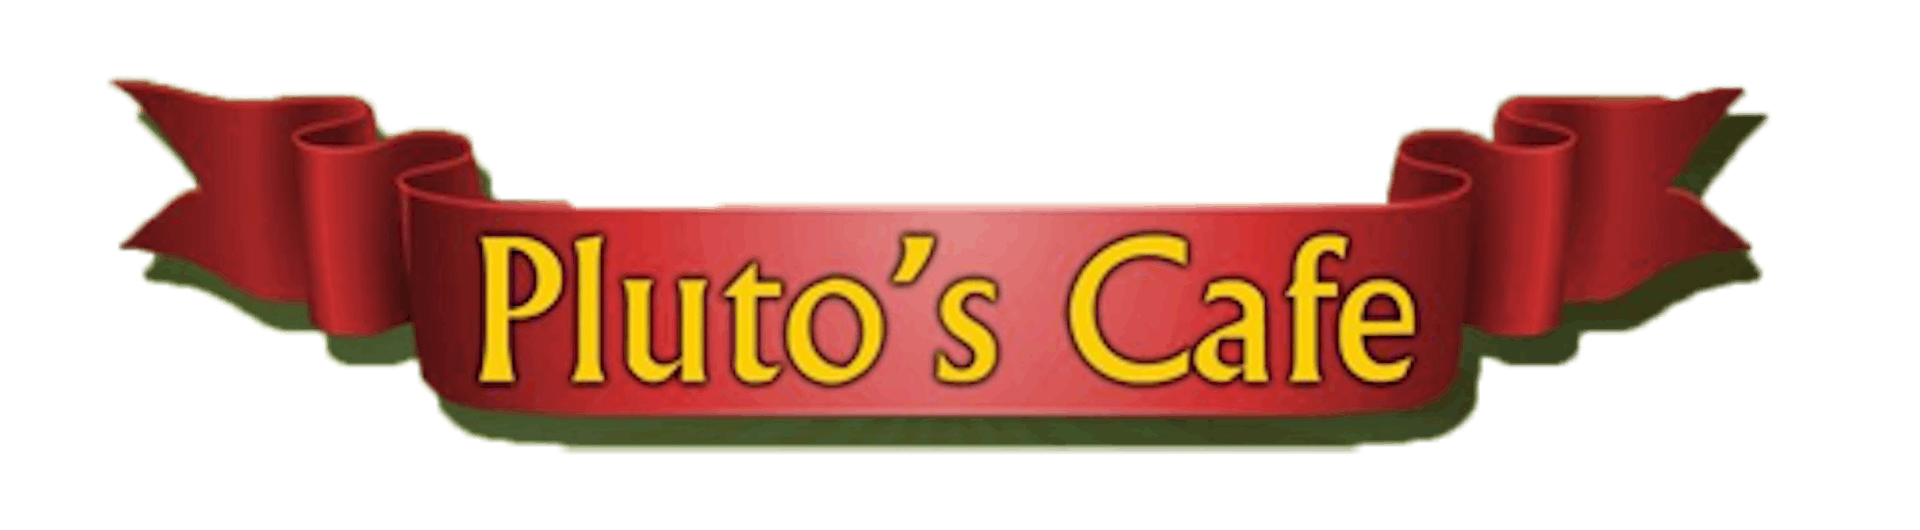 Pluto's Cafe